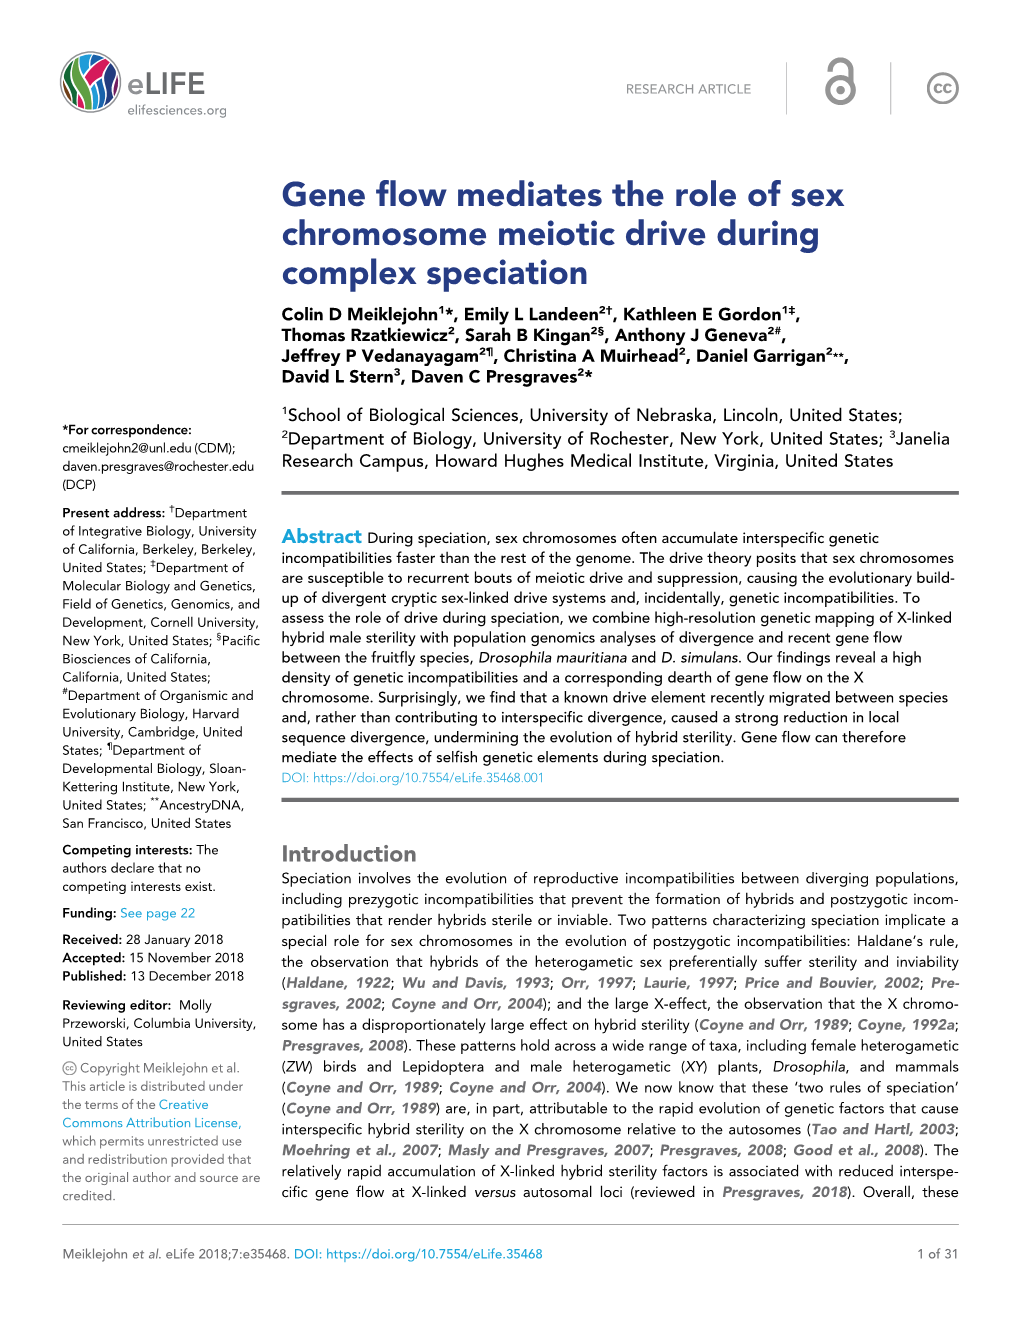 Gene Flow Mediates the Role of Sex Chromosome Meiotic Drive